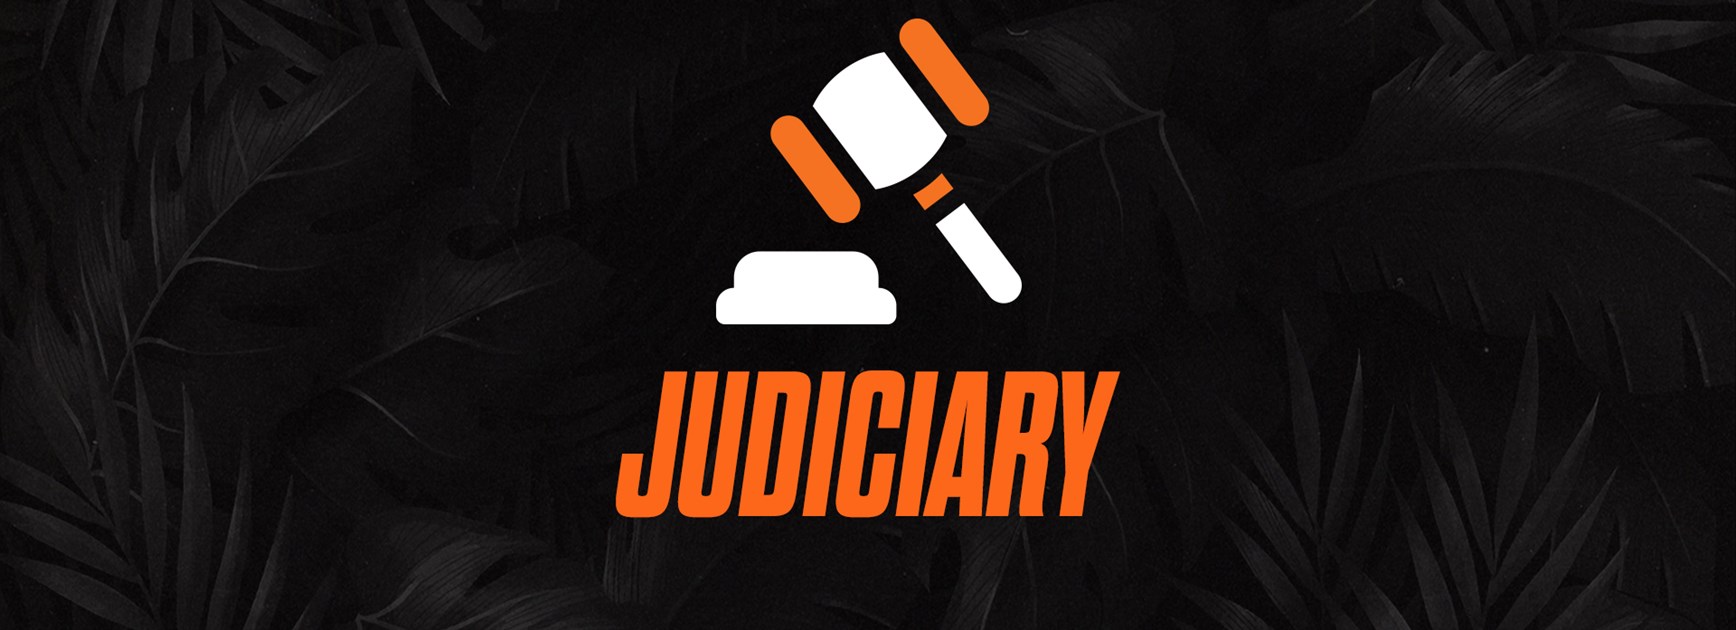 Judiciary: NRLW Round 6 vs Roosters